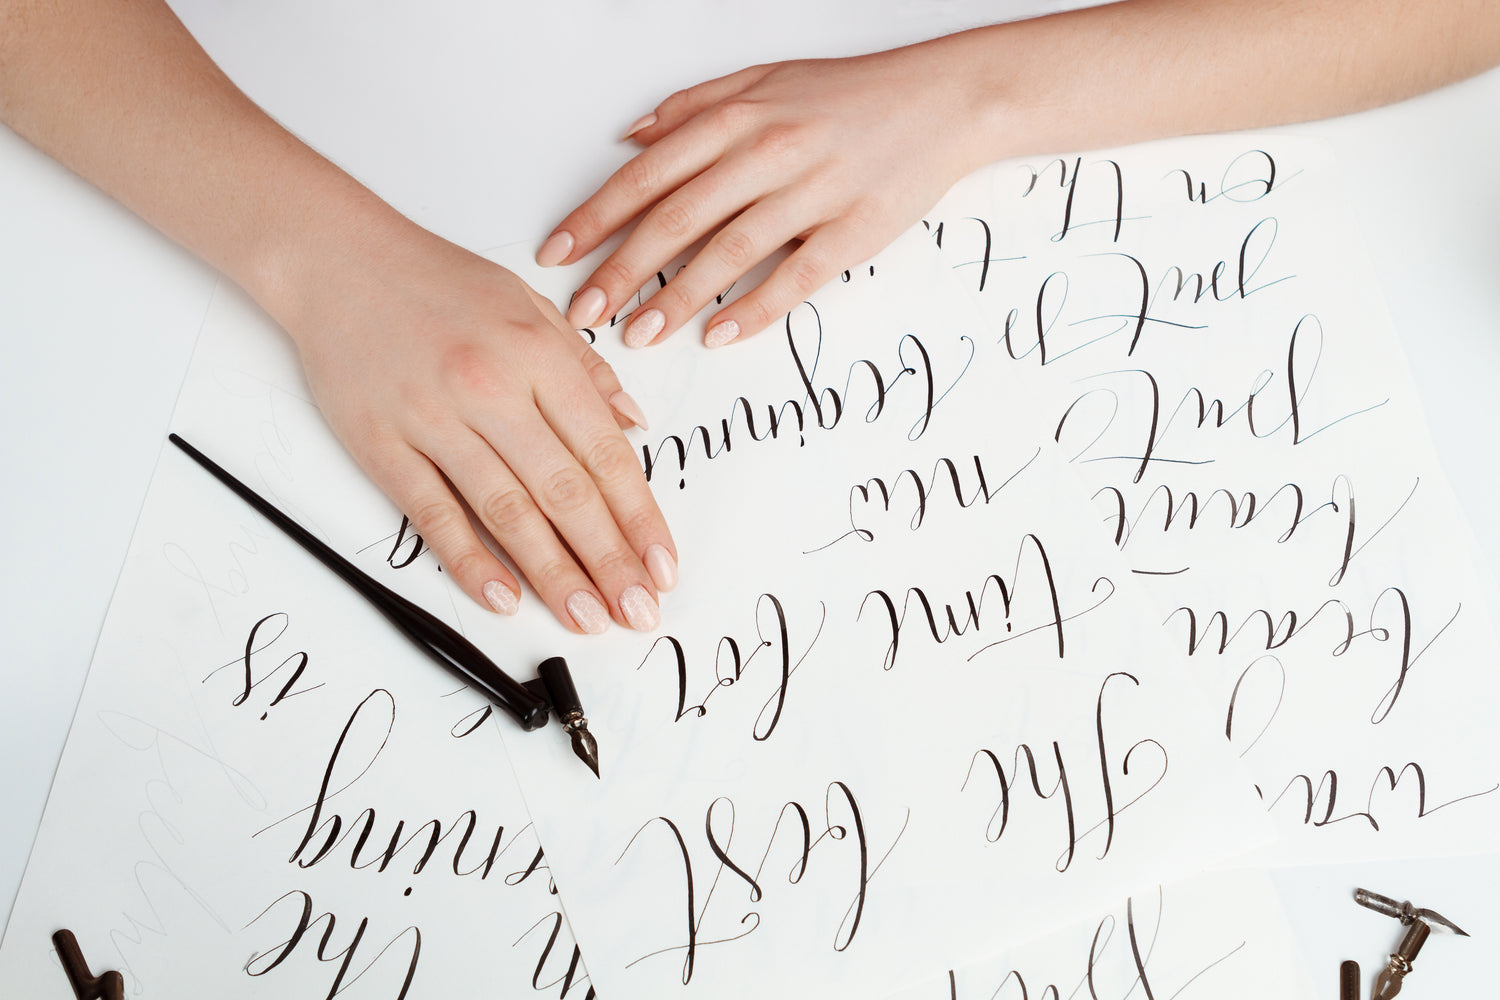 Calligraphy Oblique Pen Holder – Trustela